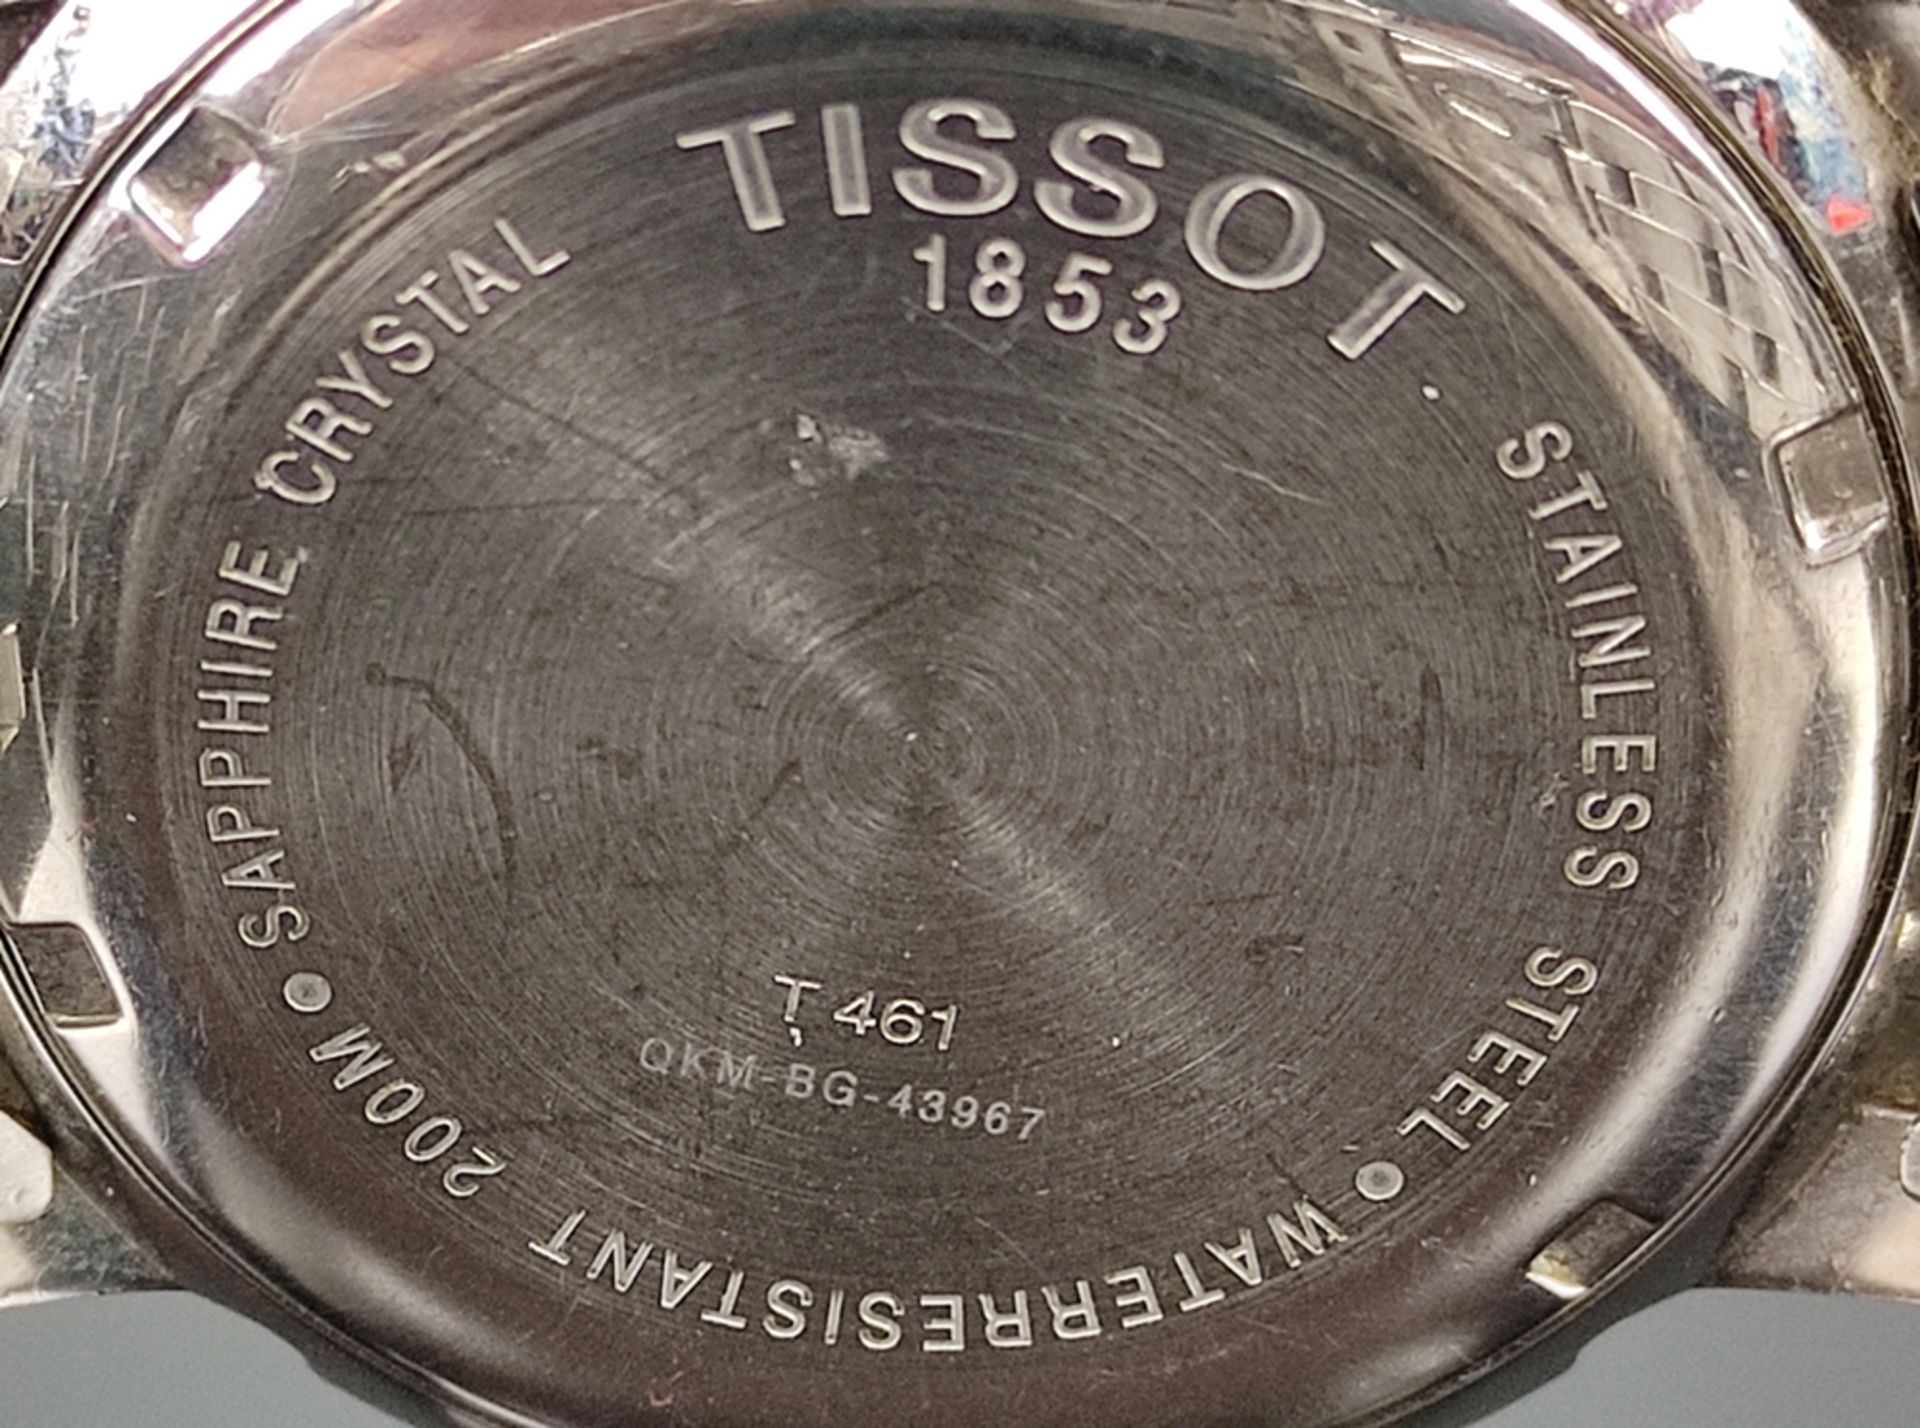 Tissot PRC 200 Chronograph, Kollektion T-Sport, Wasserdicht  - Bild 5 aus 5